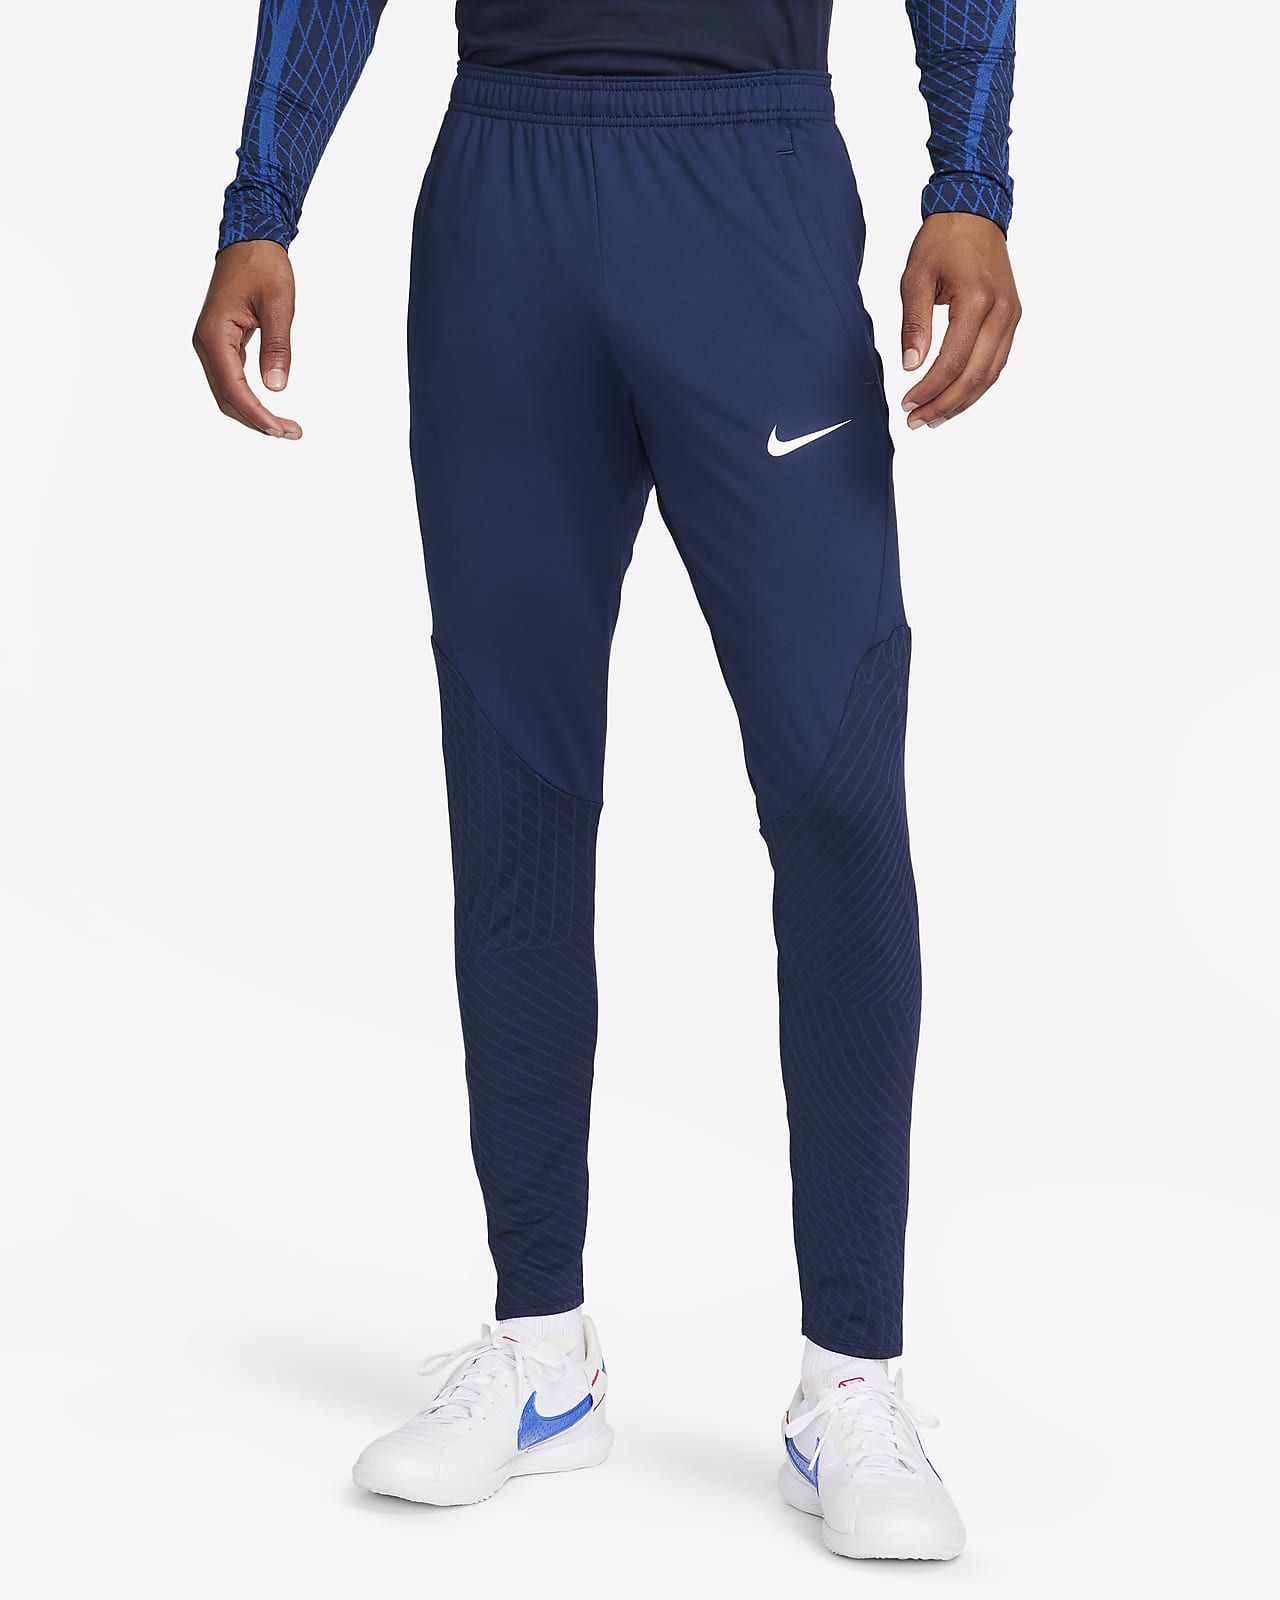 Nike Dri-FIT Strike Men's Soccer Pants.